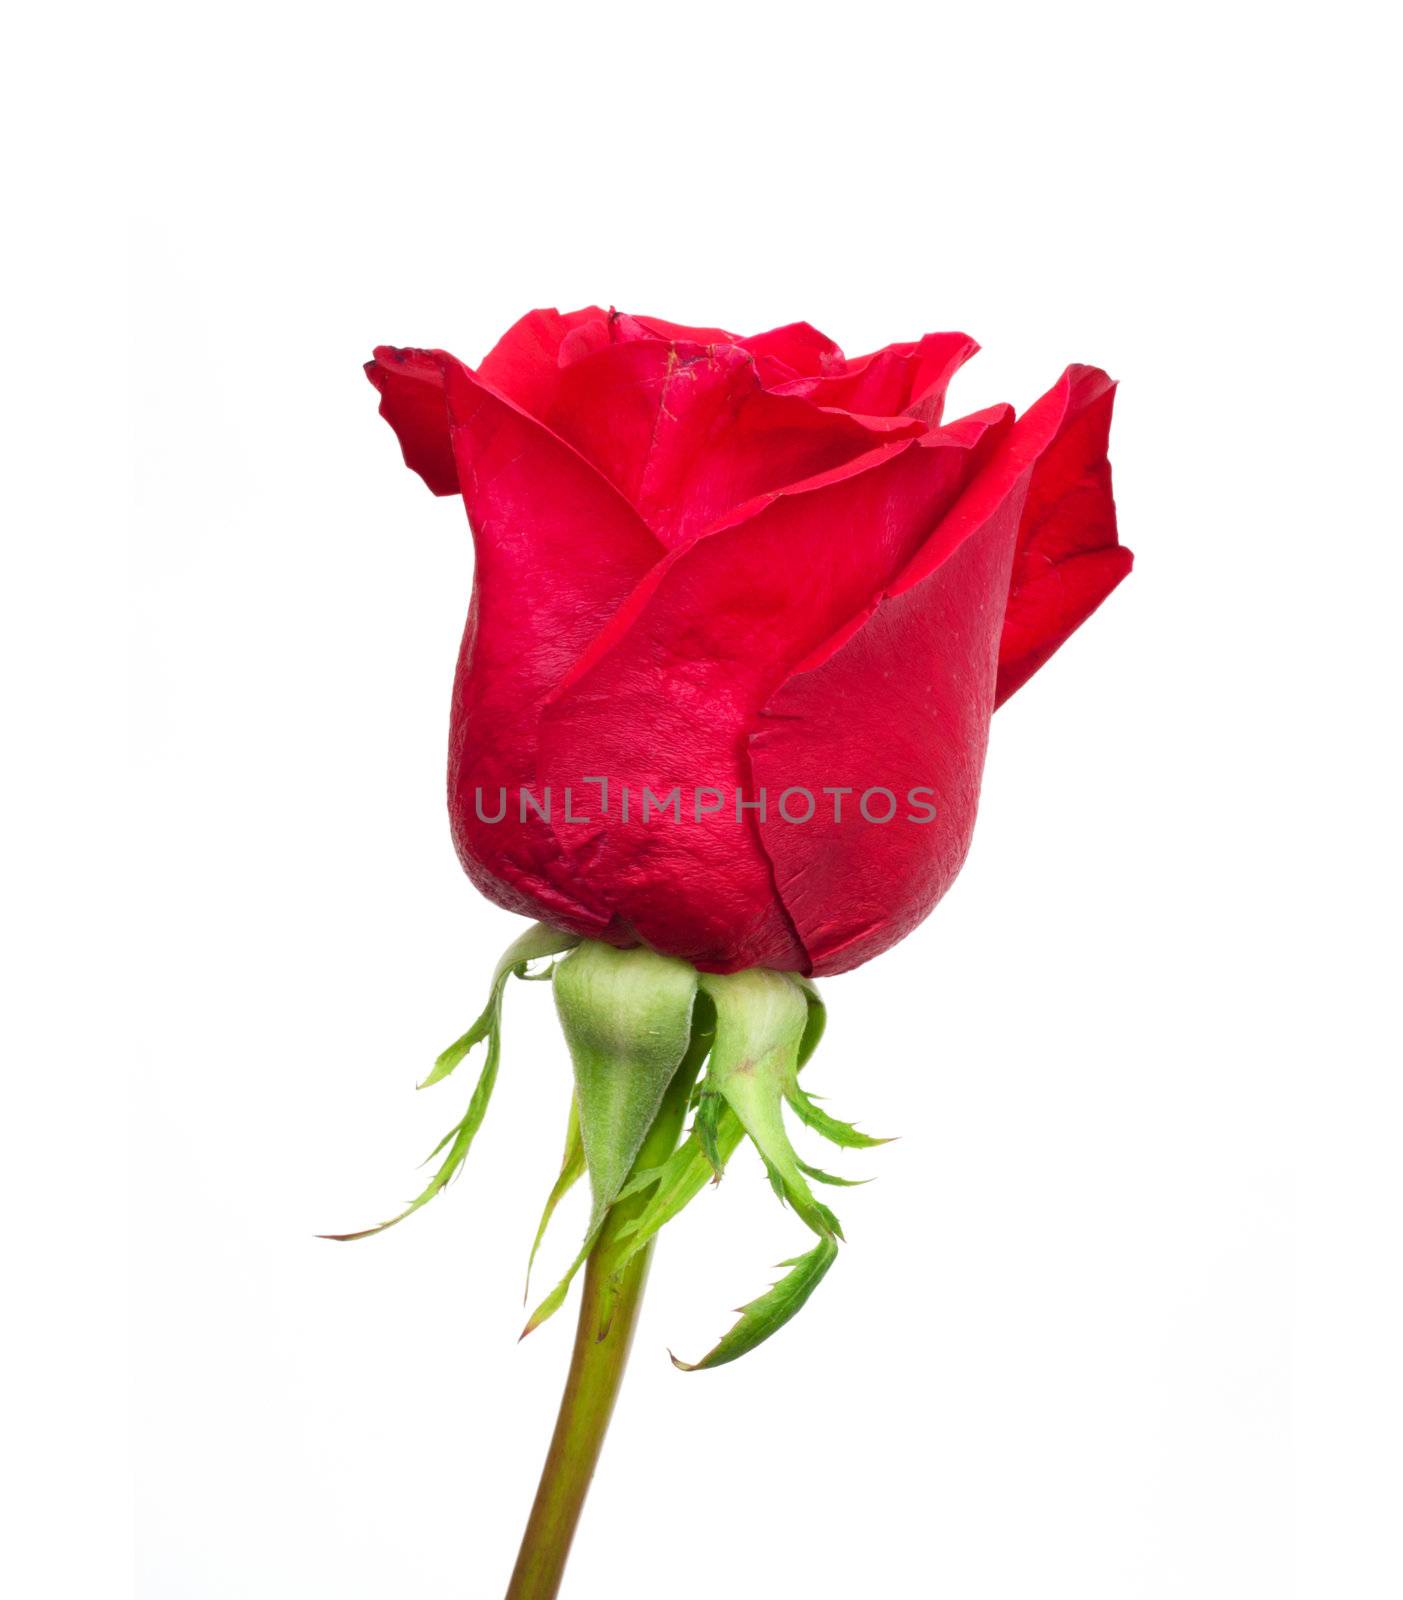 Red rose on white background  by schankz